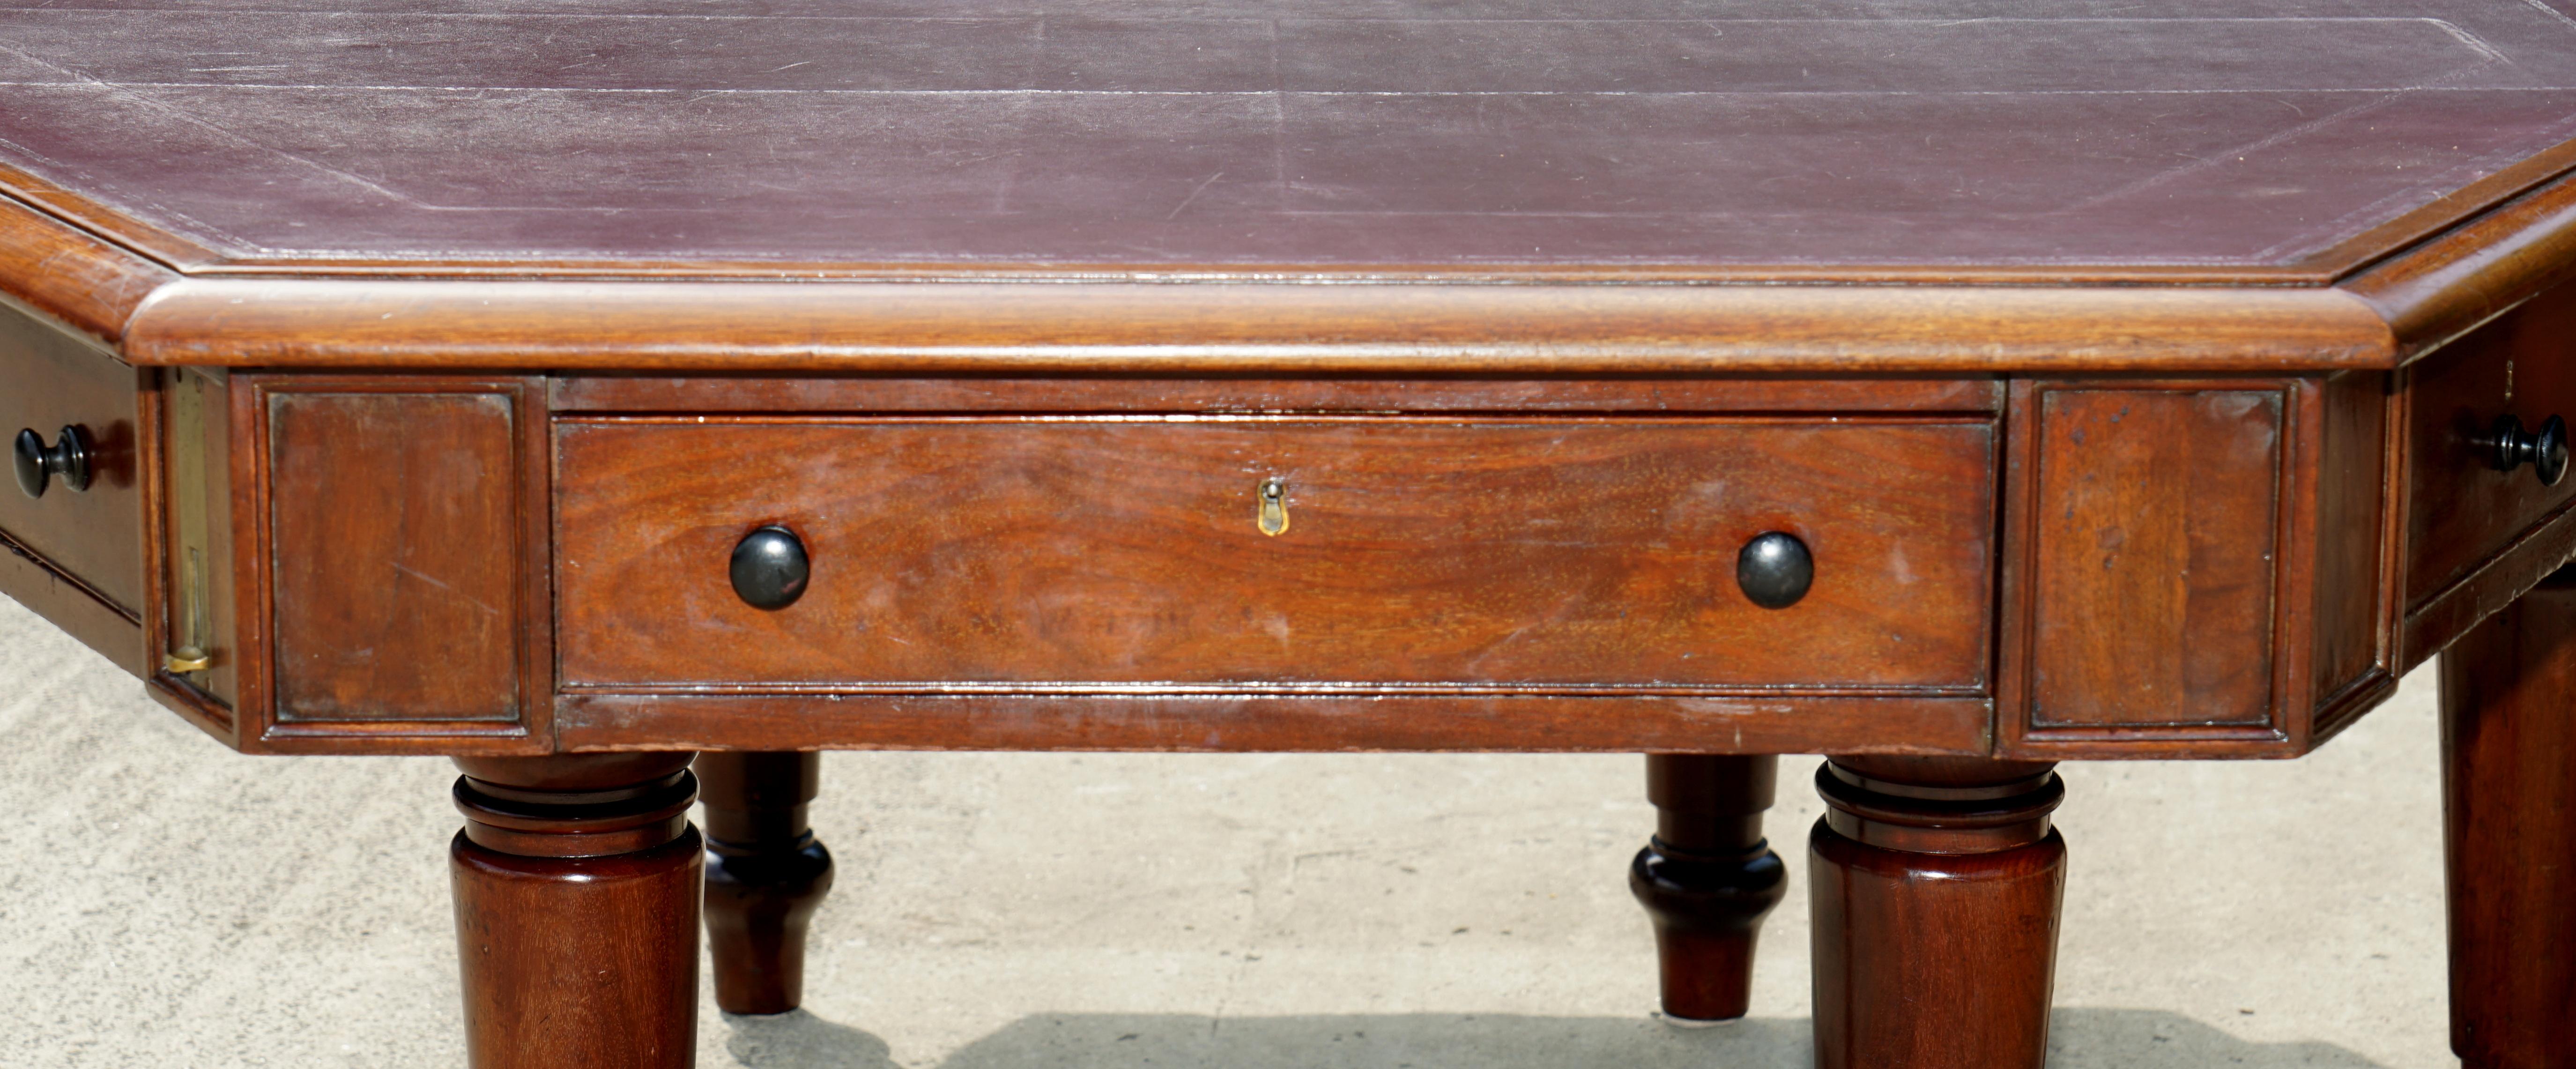 Late 18th Century Massive Antique George III 1780 Hardwood Library Desk Table George Rex Locks For Sale